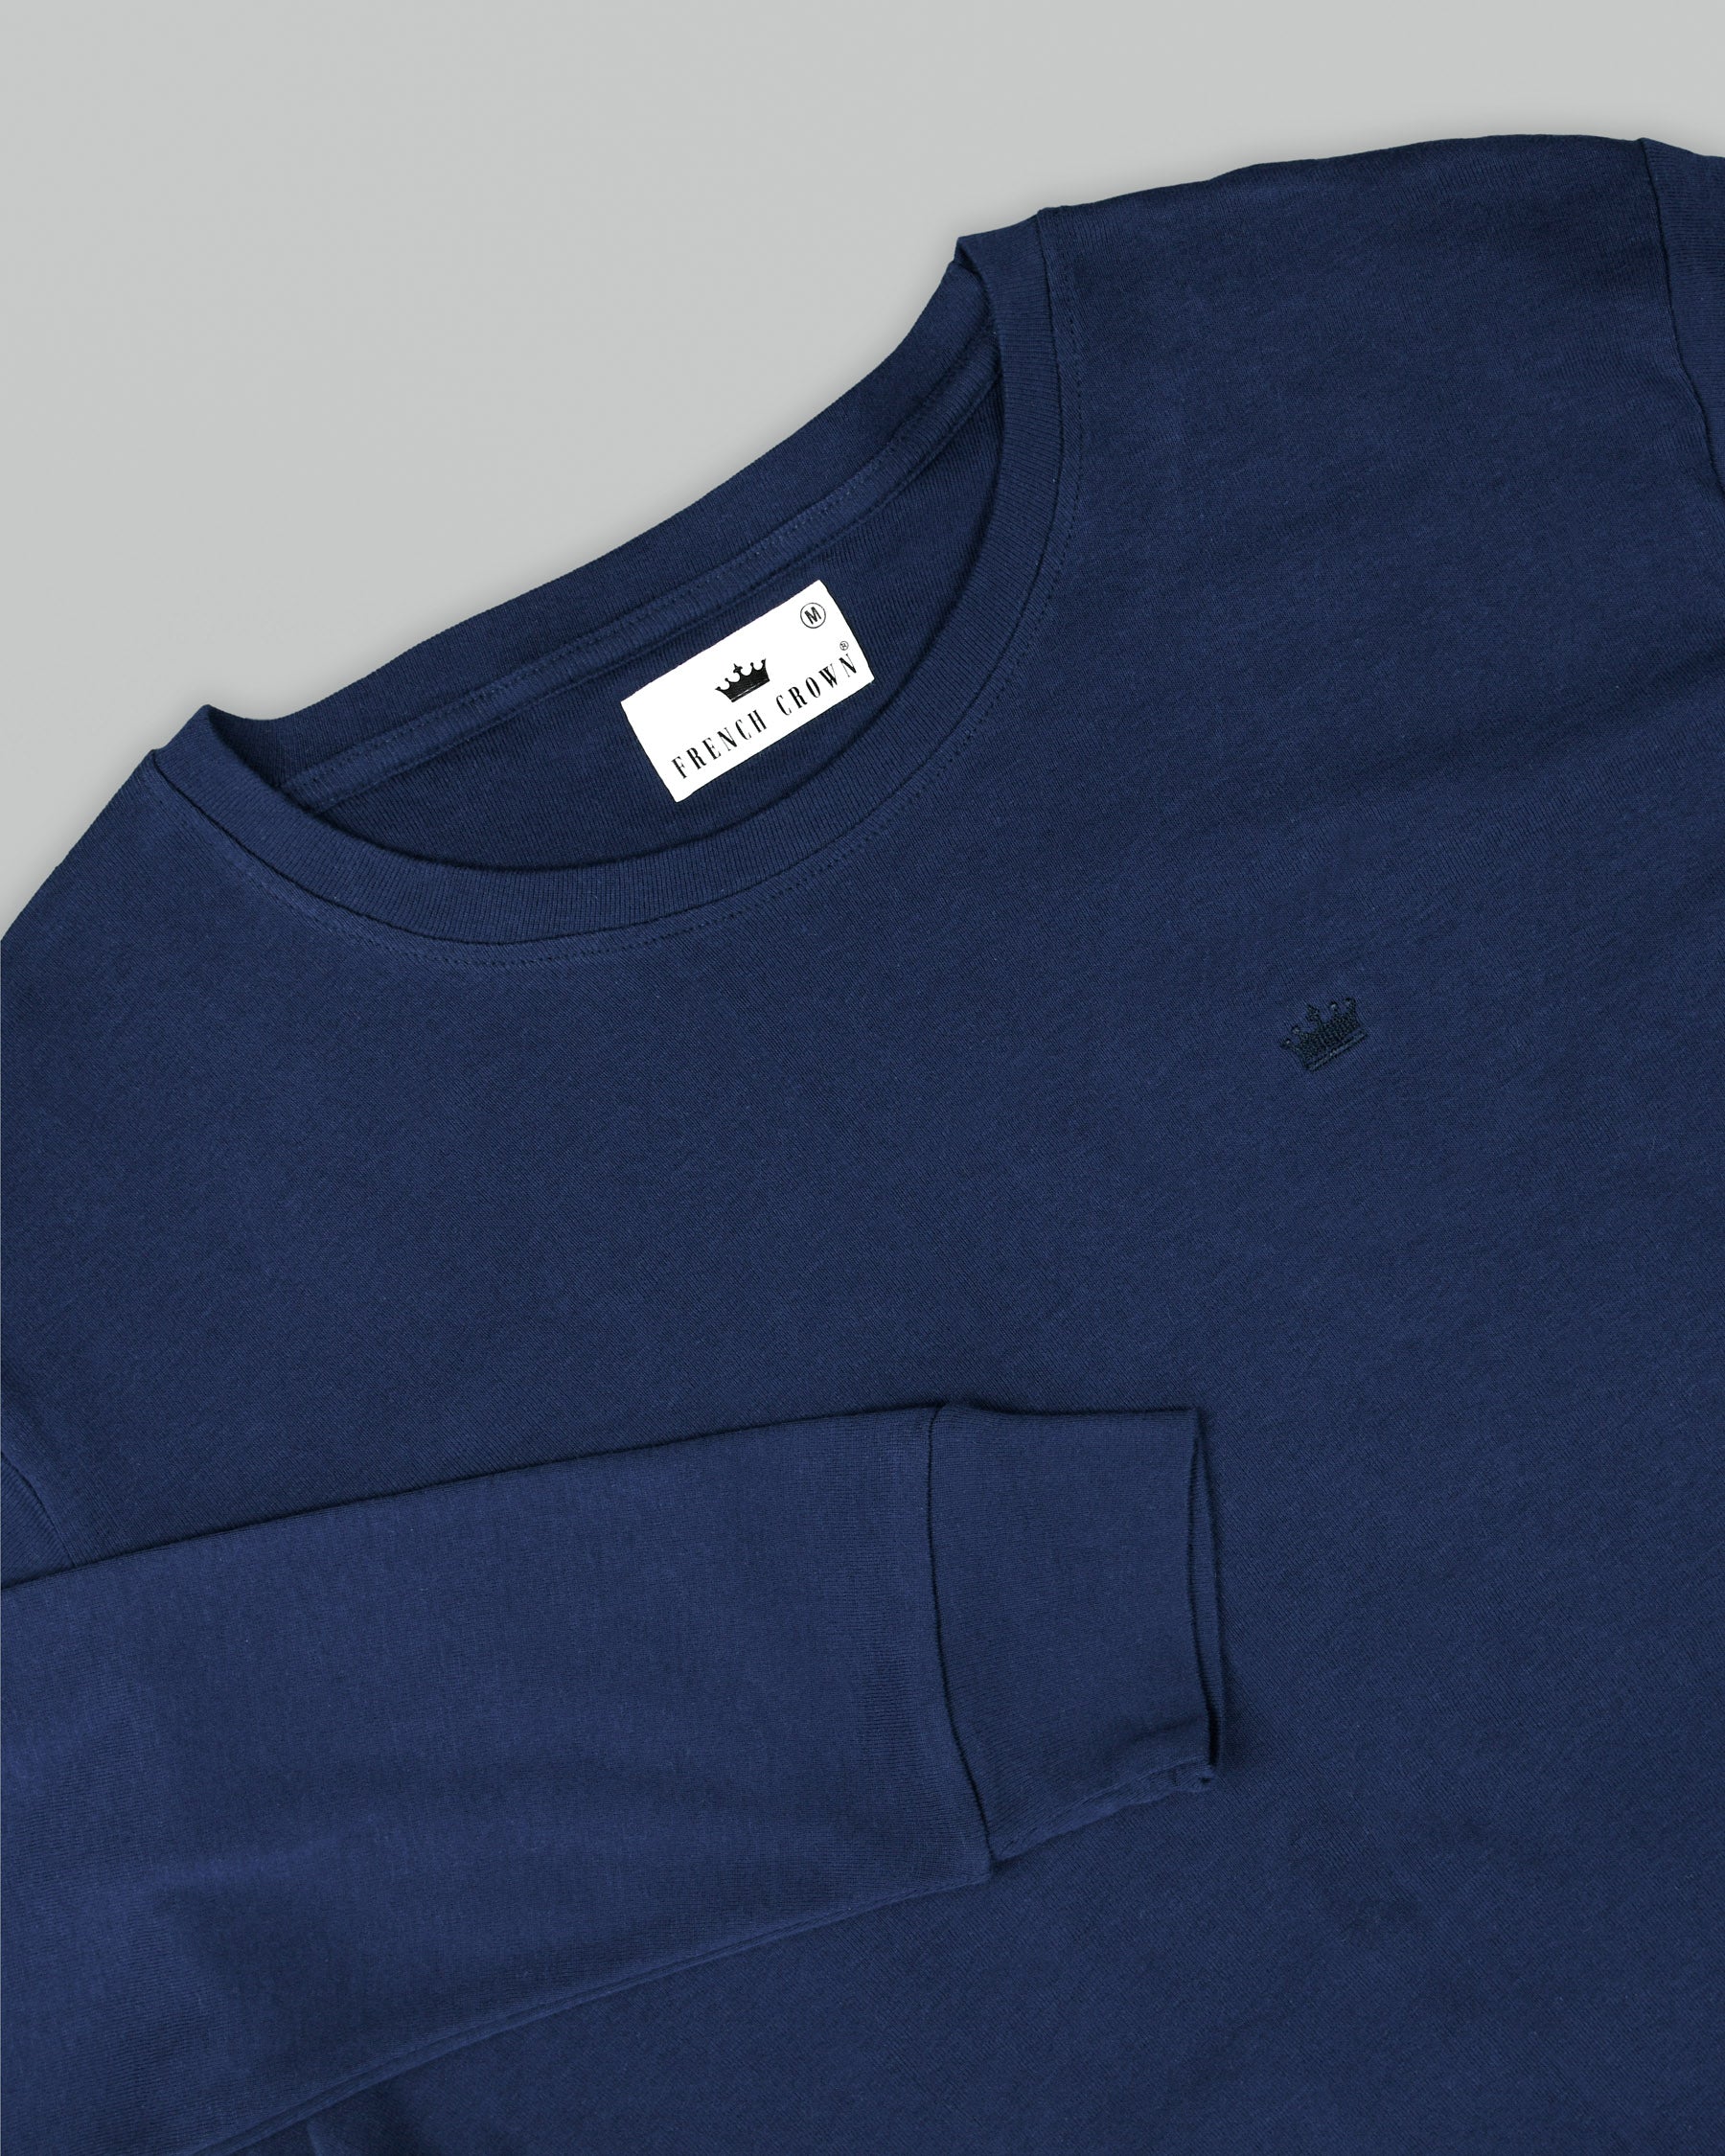 Navy Super Soft Premium Cotton Full Sleeve Organic Cotton Brushed Sweatshirt TS127-M, TS127-L, TS127-XL, TS127-XXL, TS127-S